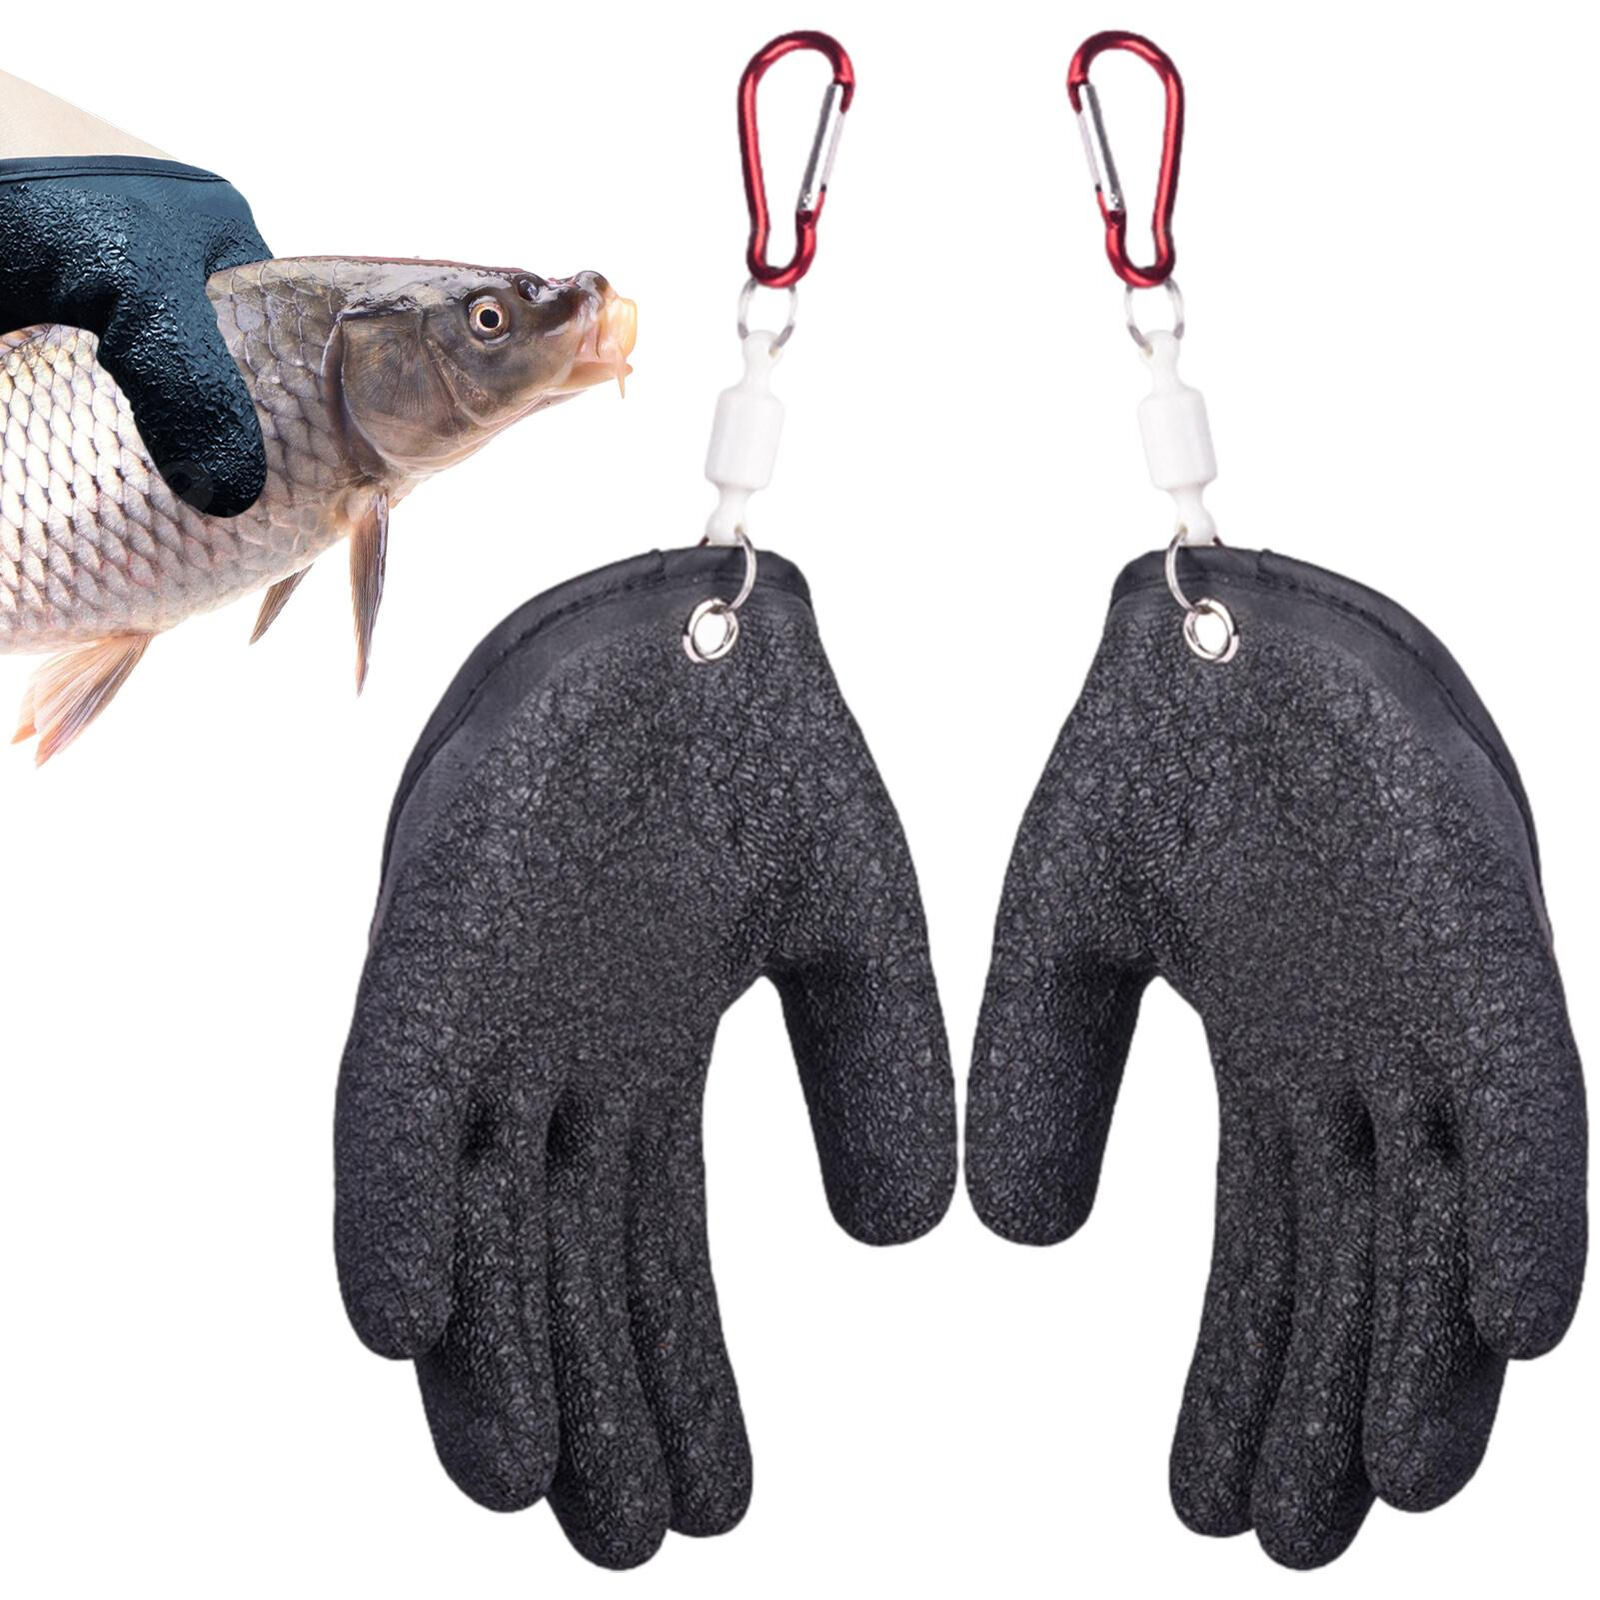  Fisherman's Gloves Non-Slip Fishing Gloves Freshwater/Saltwater NEW Large